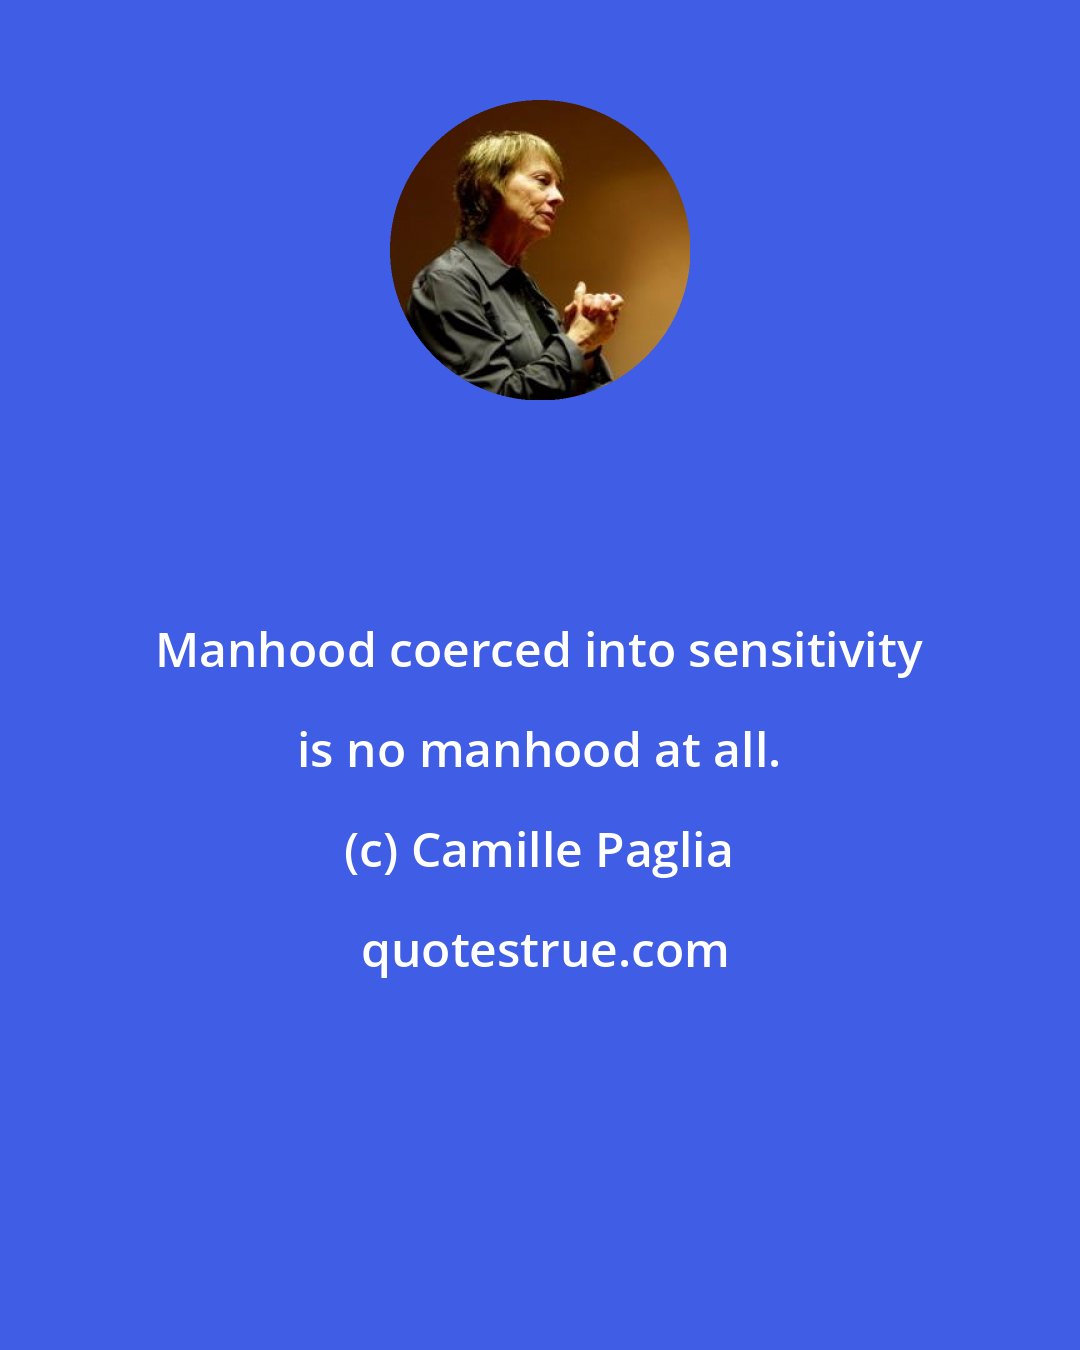 Camille Paglia: Manhood coerced into sensitivity is no manhood at all.